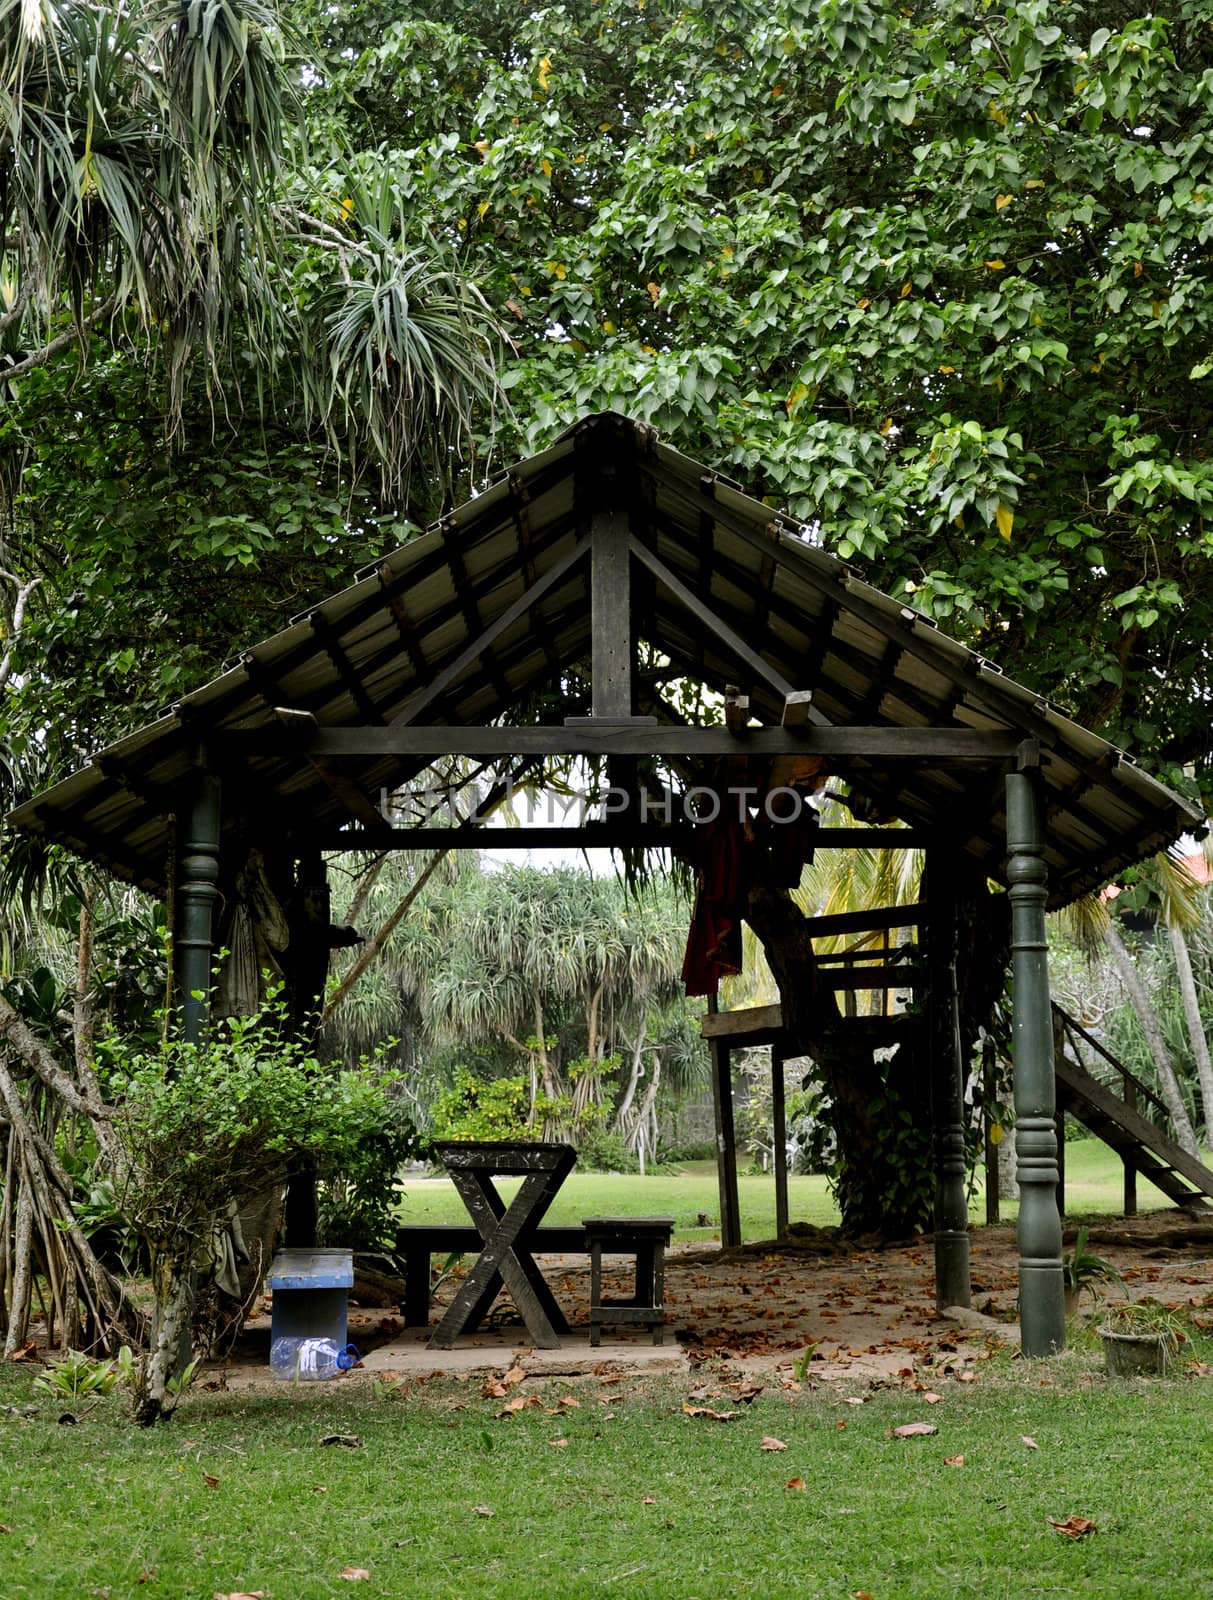 A hut at a spice garden in Sri Lanka by kdreams02